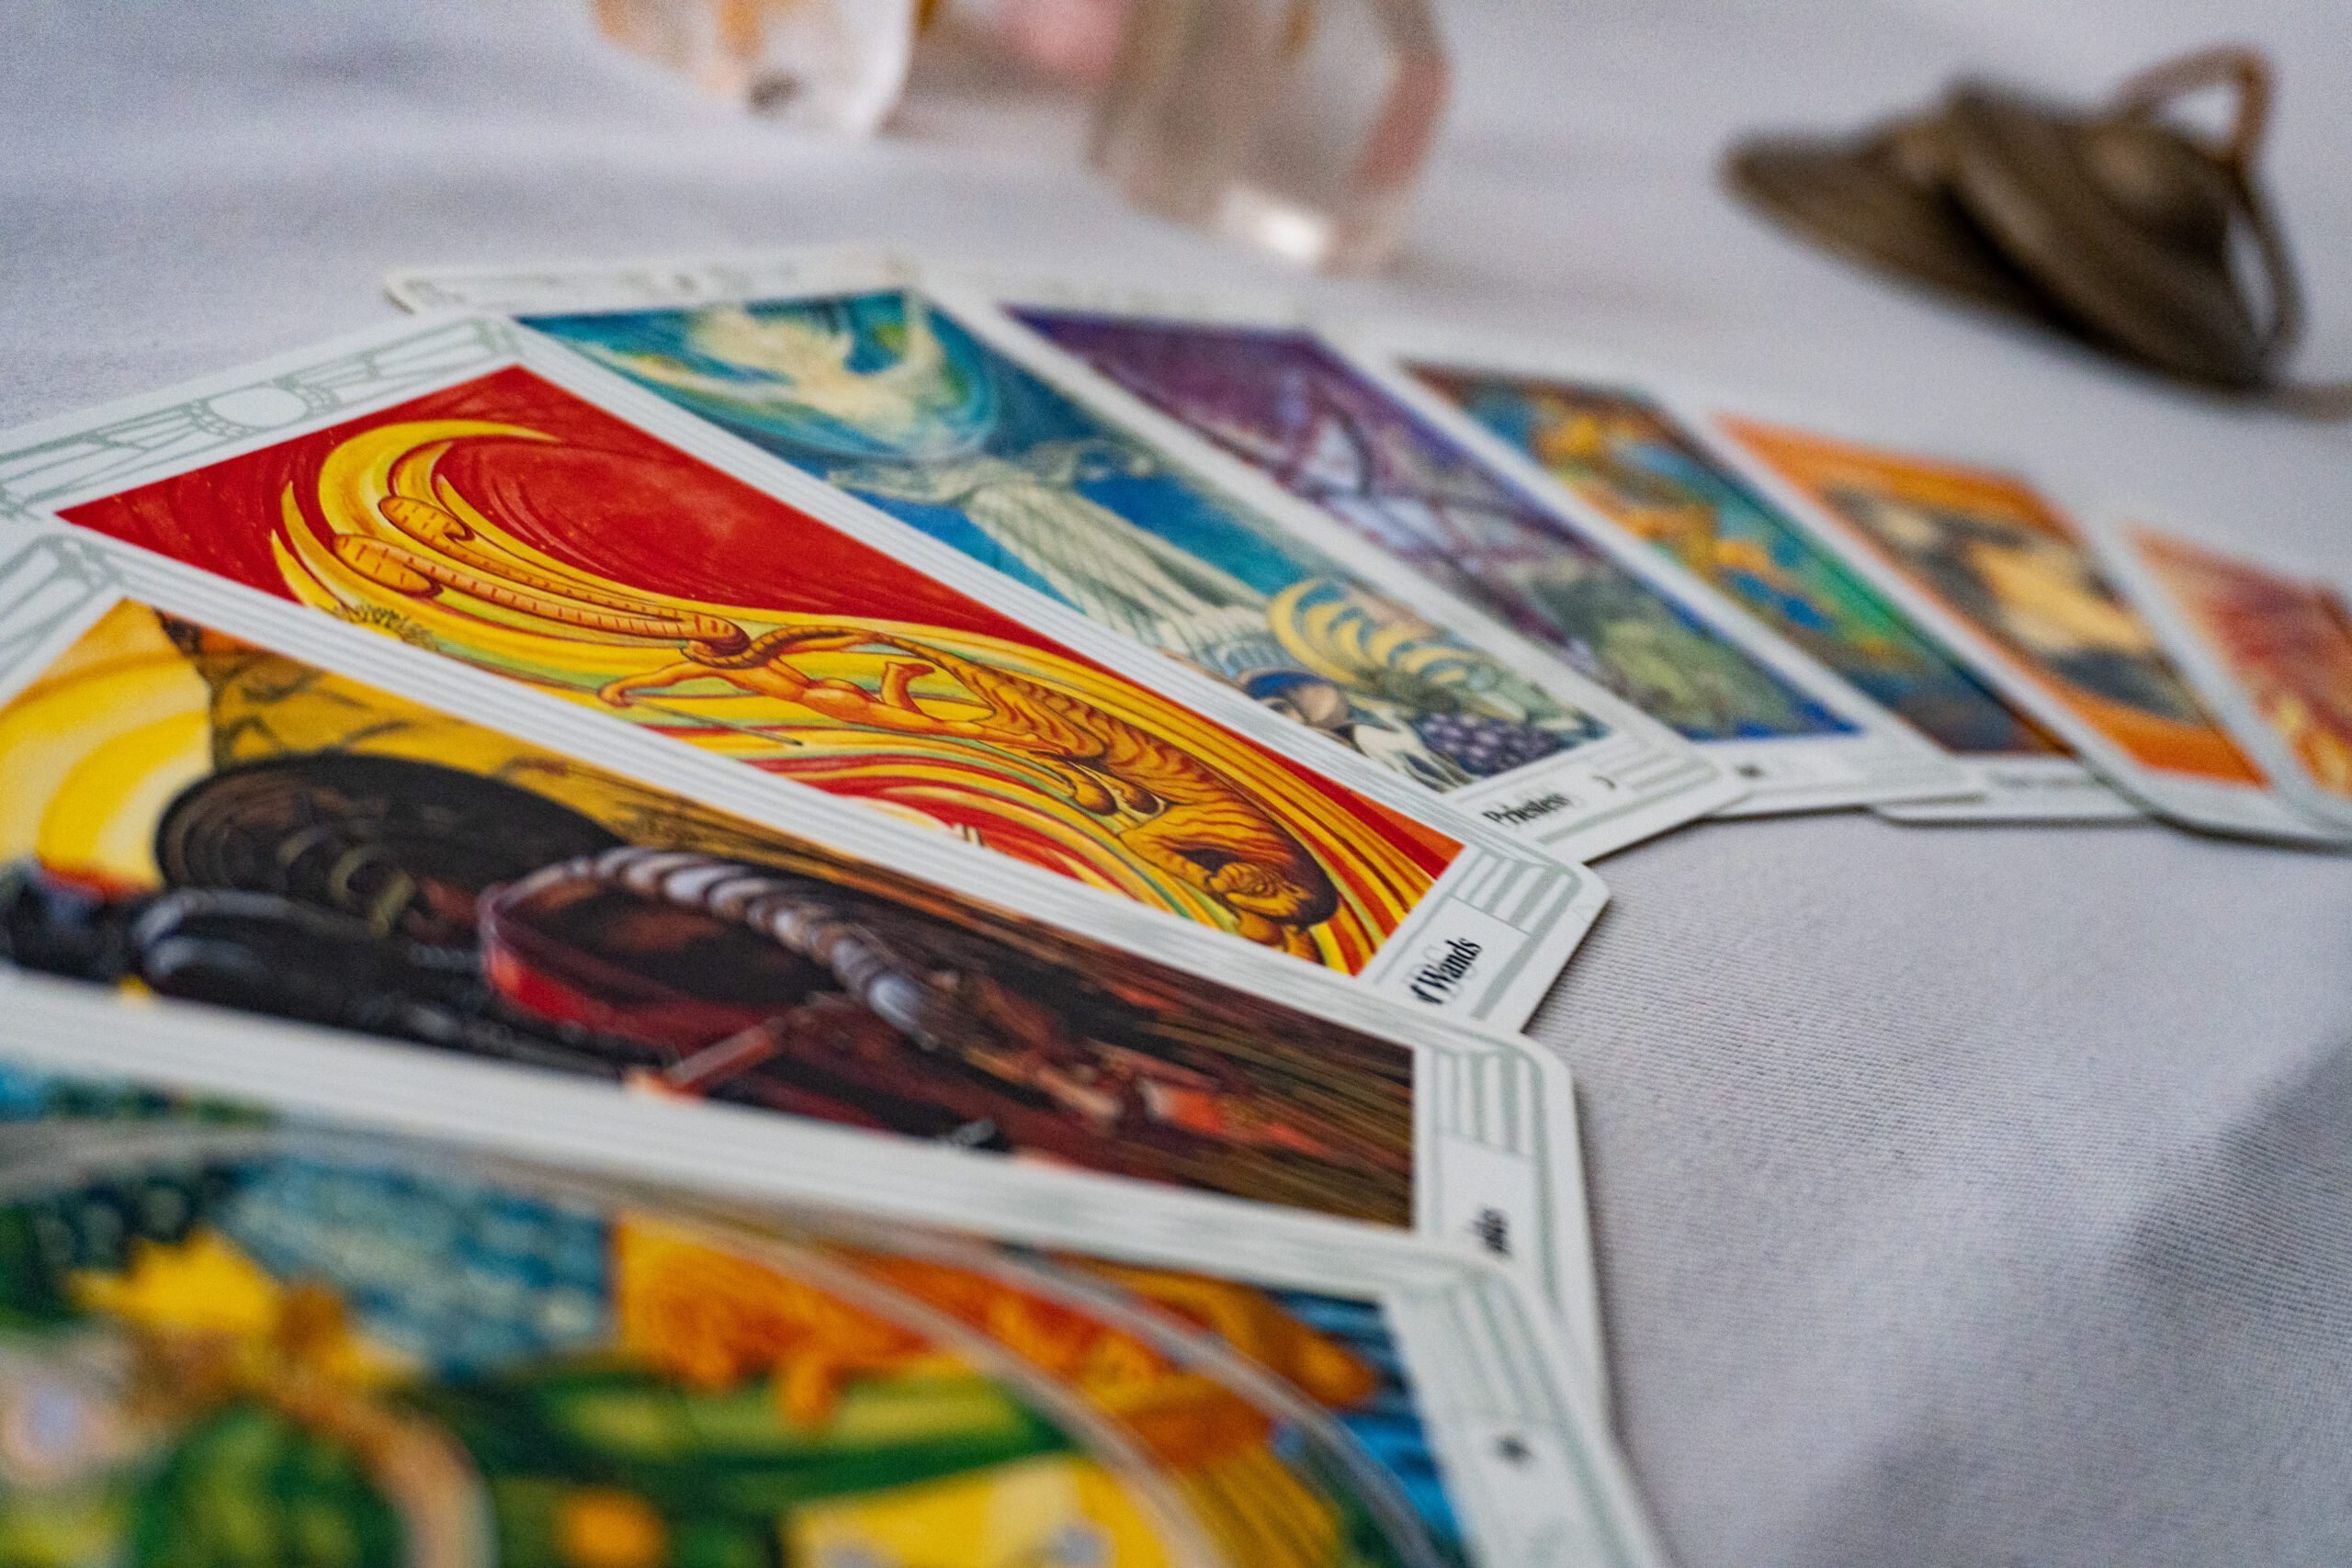 Tarot cards spread on a white table